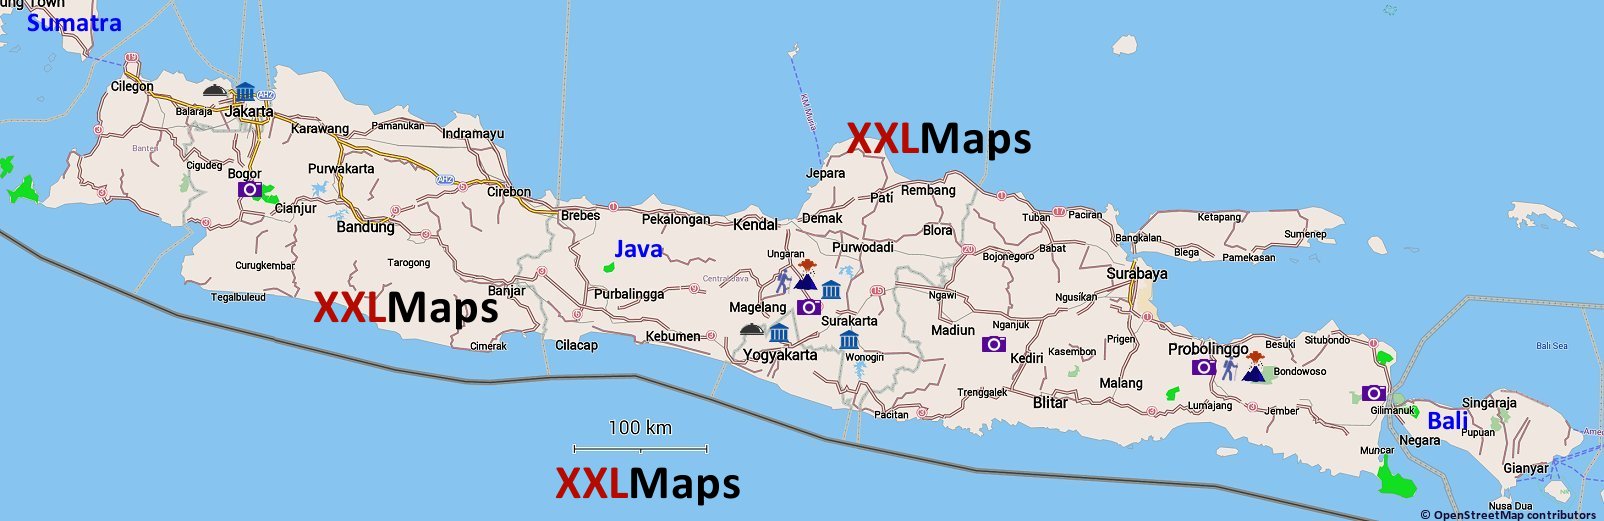 Mappa fisica di Java (Indonesia)